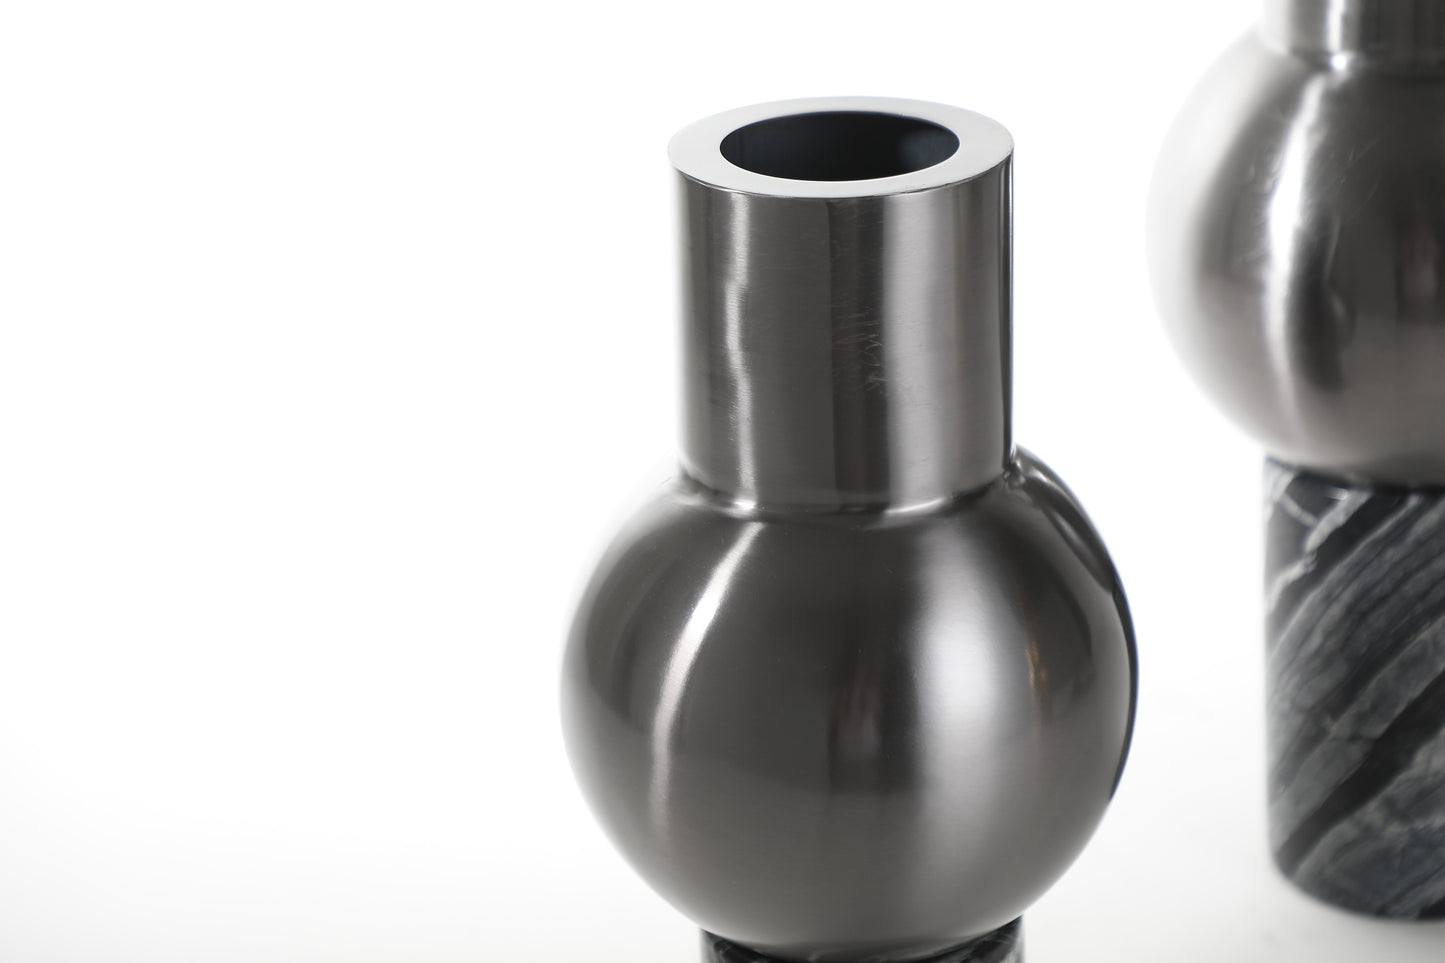 Silver & Black Marble & Stainless Steel Vase